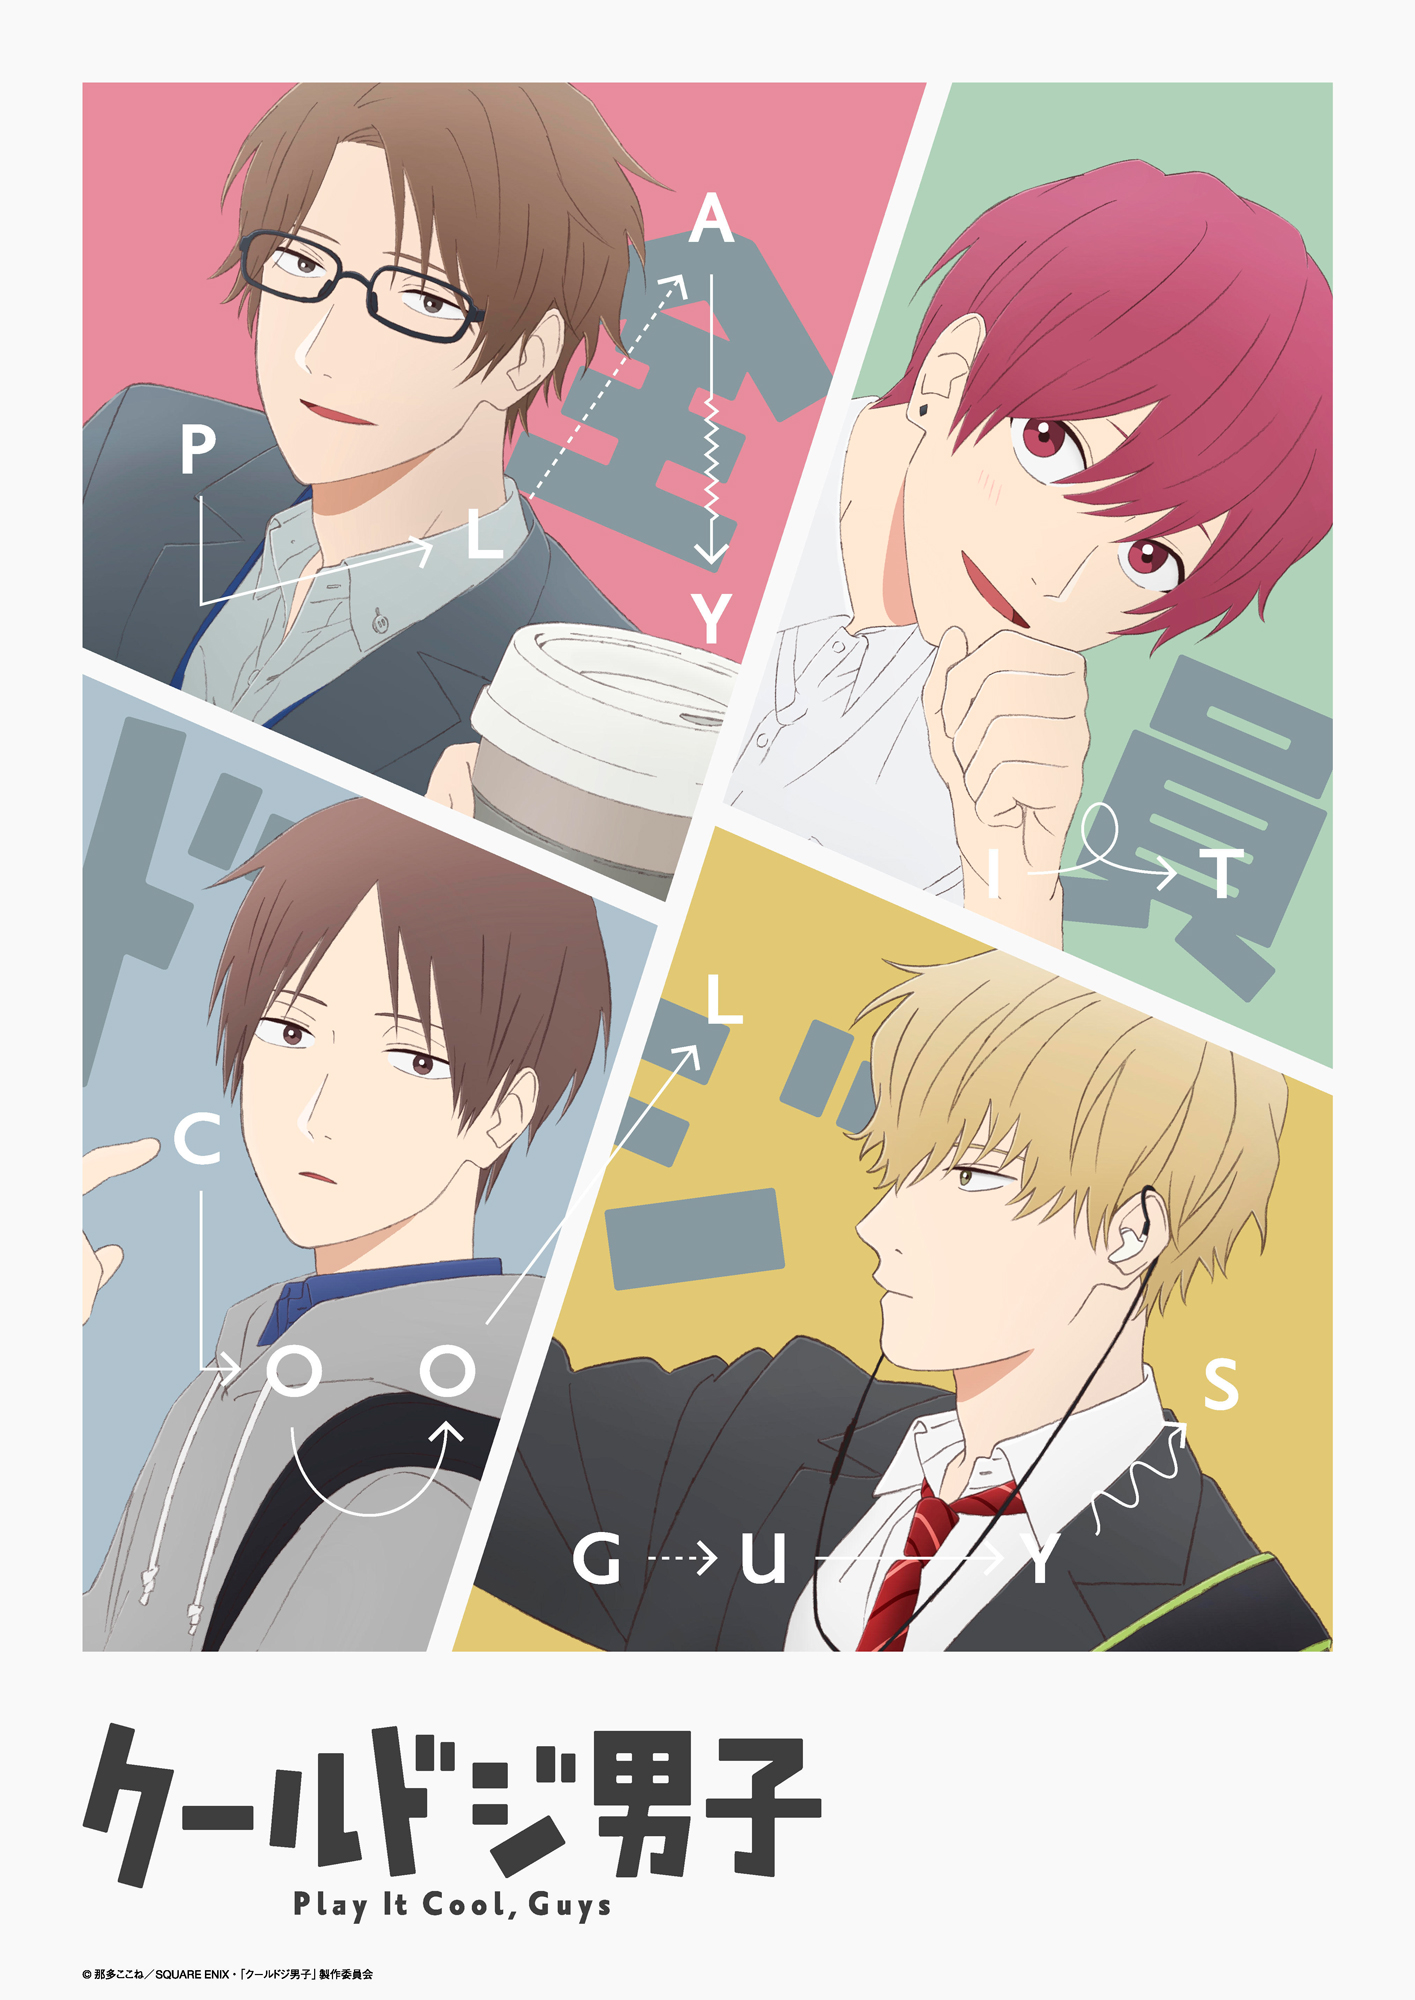 14+] Cool Boy Anime Wallpapers - WallpaperSafari